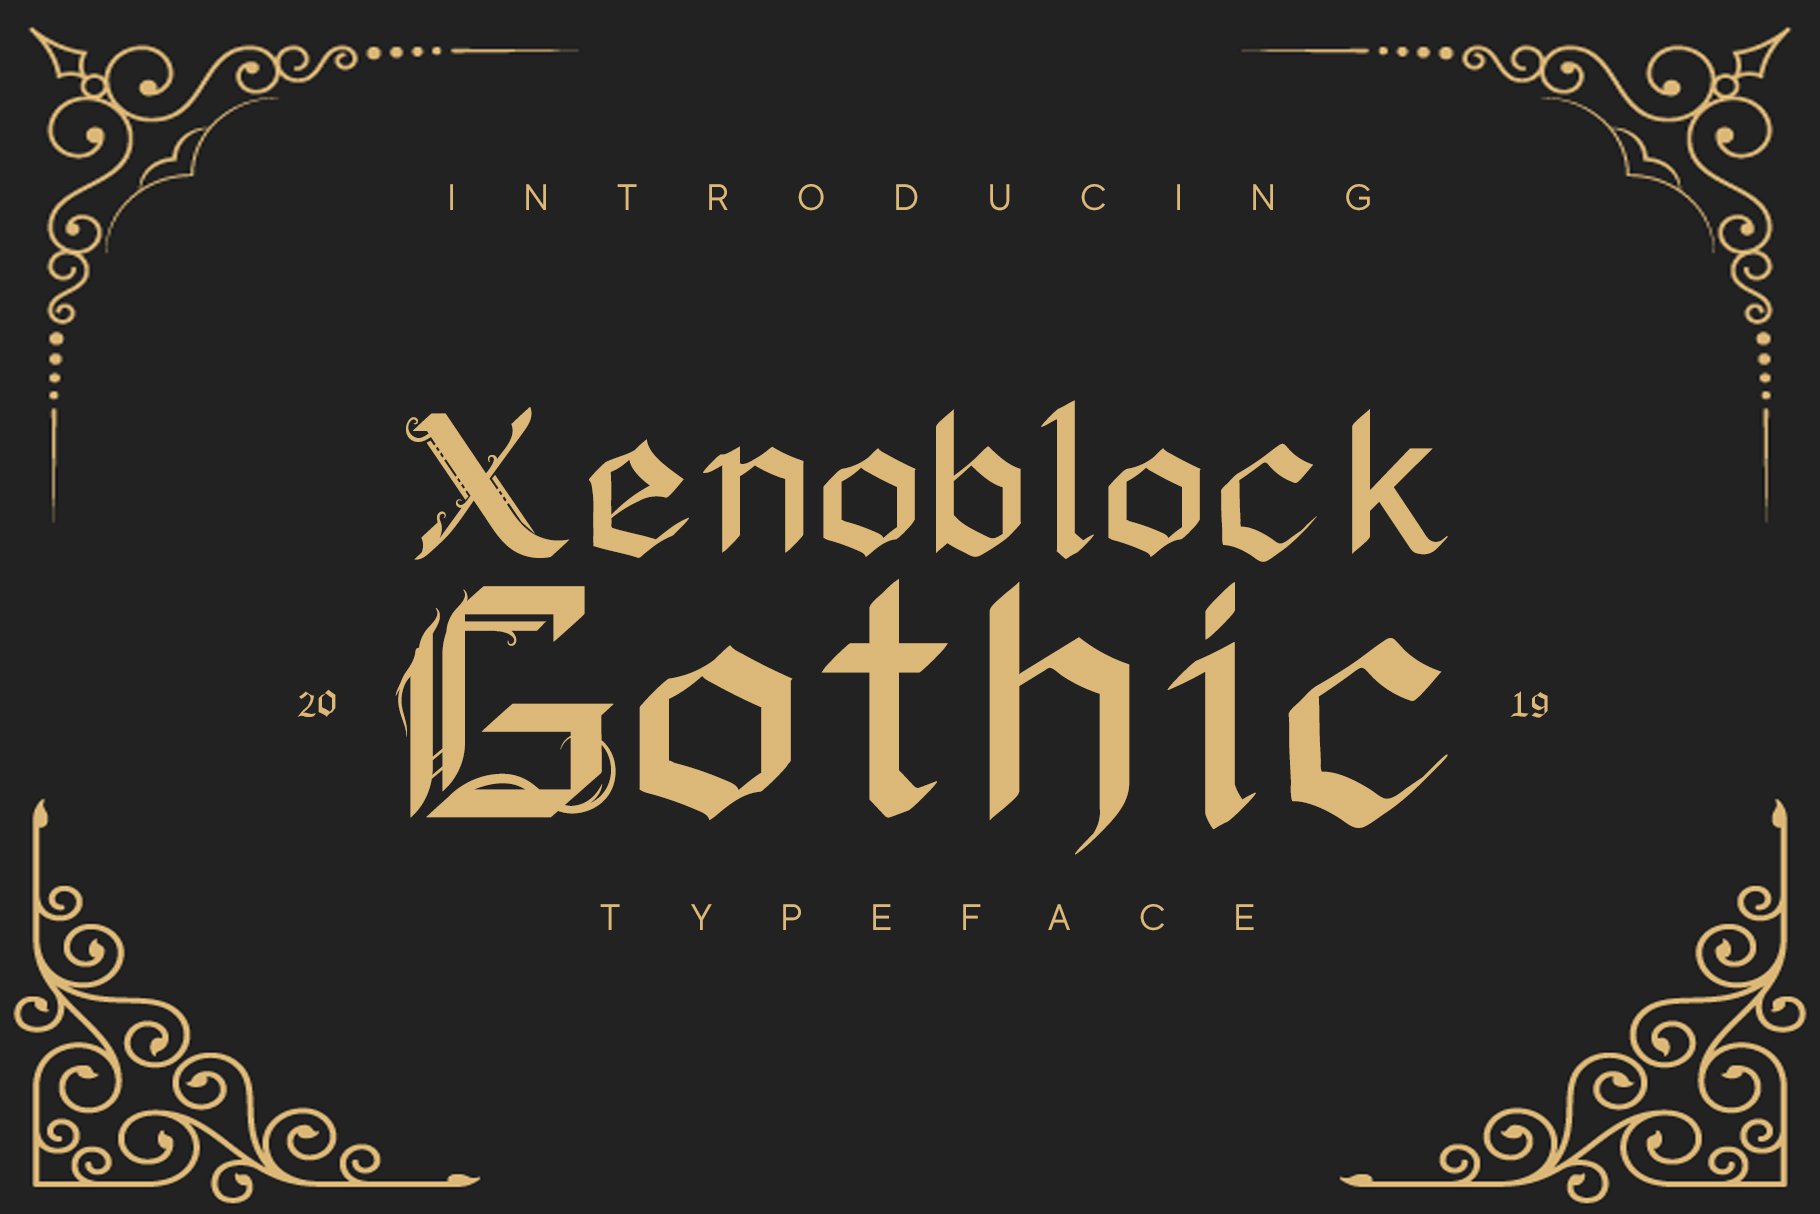 Xenoblock Gothic Typeface cover image.